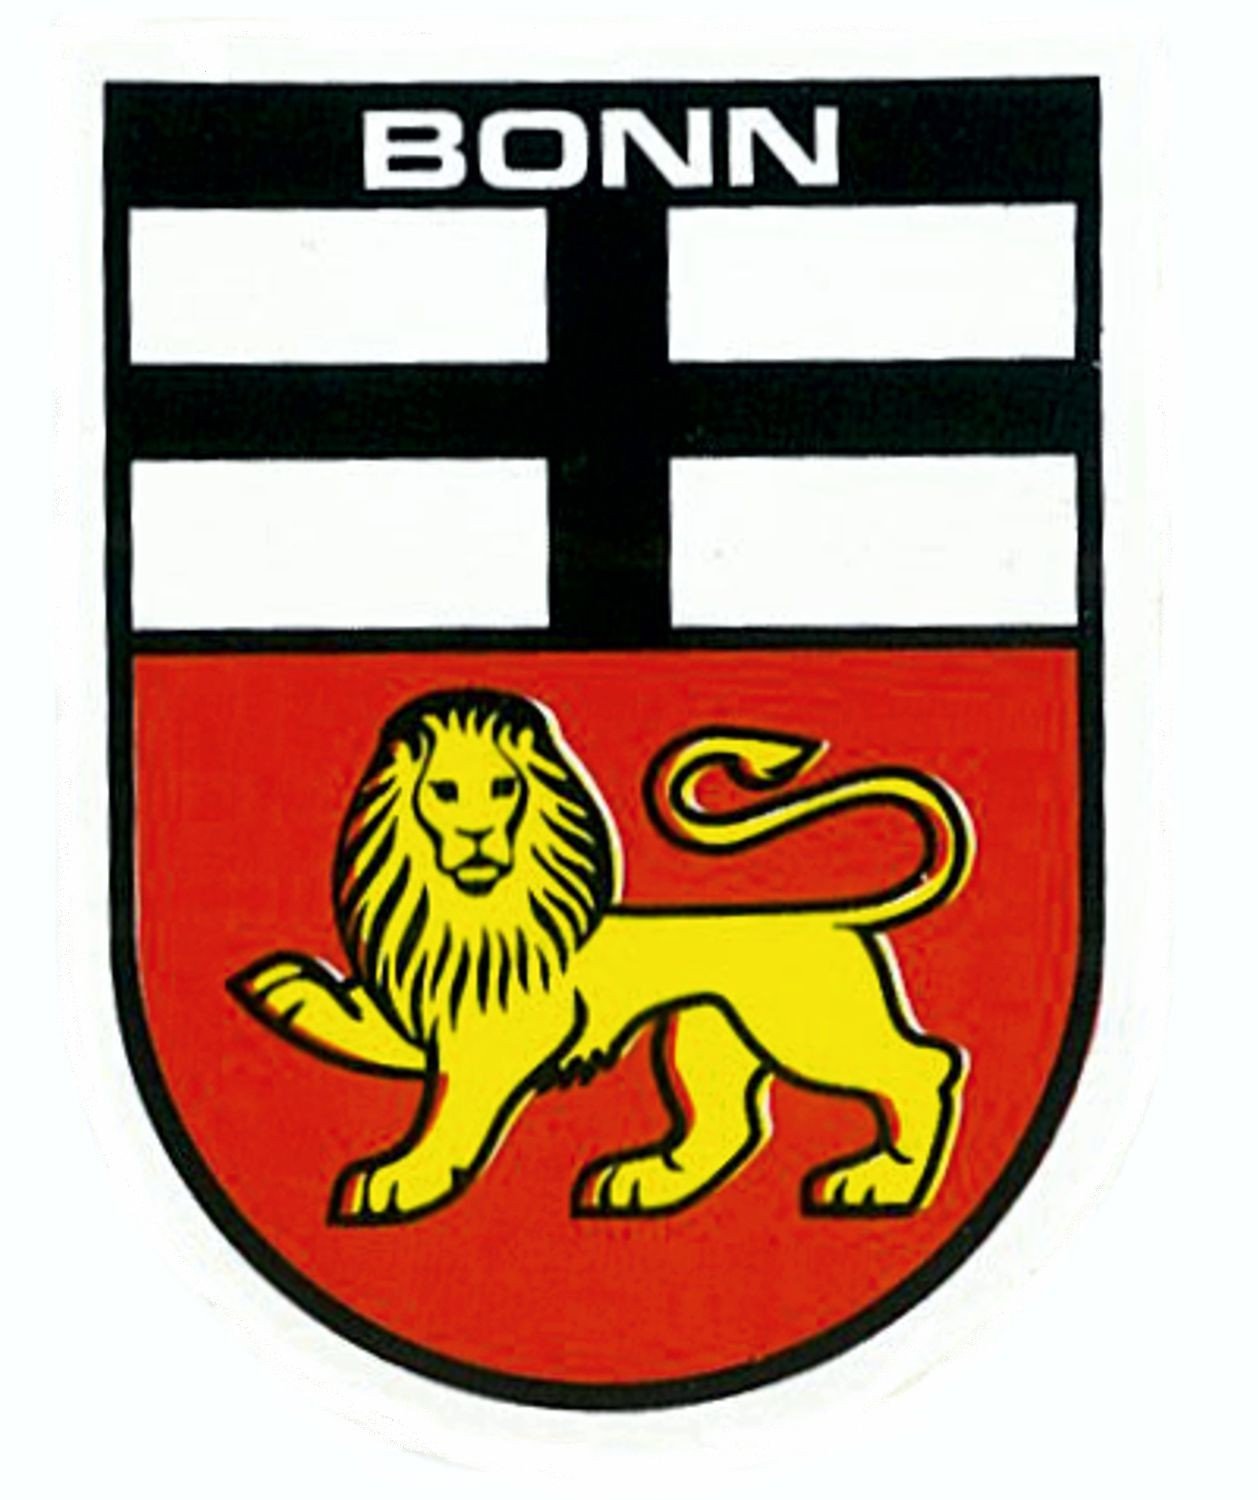 carstyling XXL Aufkleber Wappen Bonn 60 x 45 mm von carstyling XXL